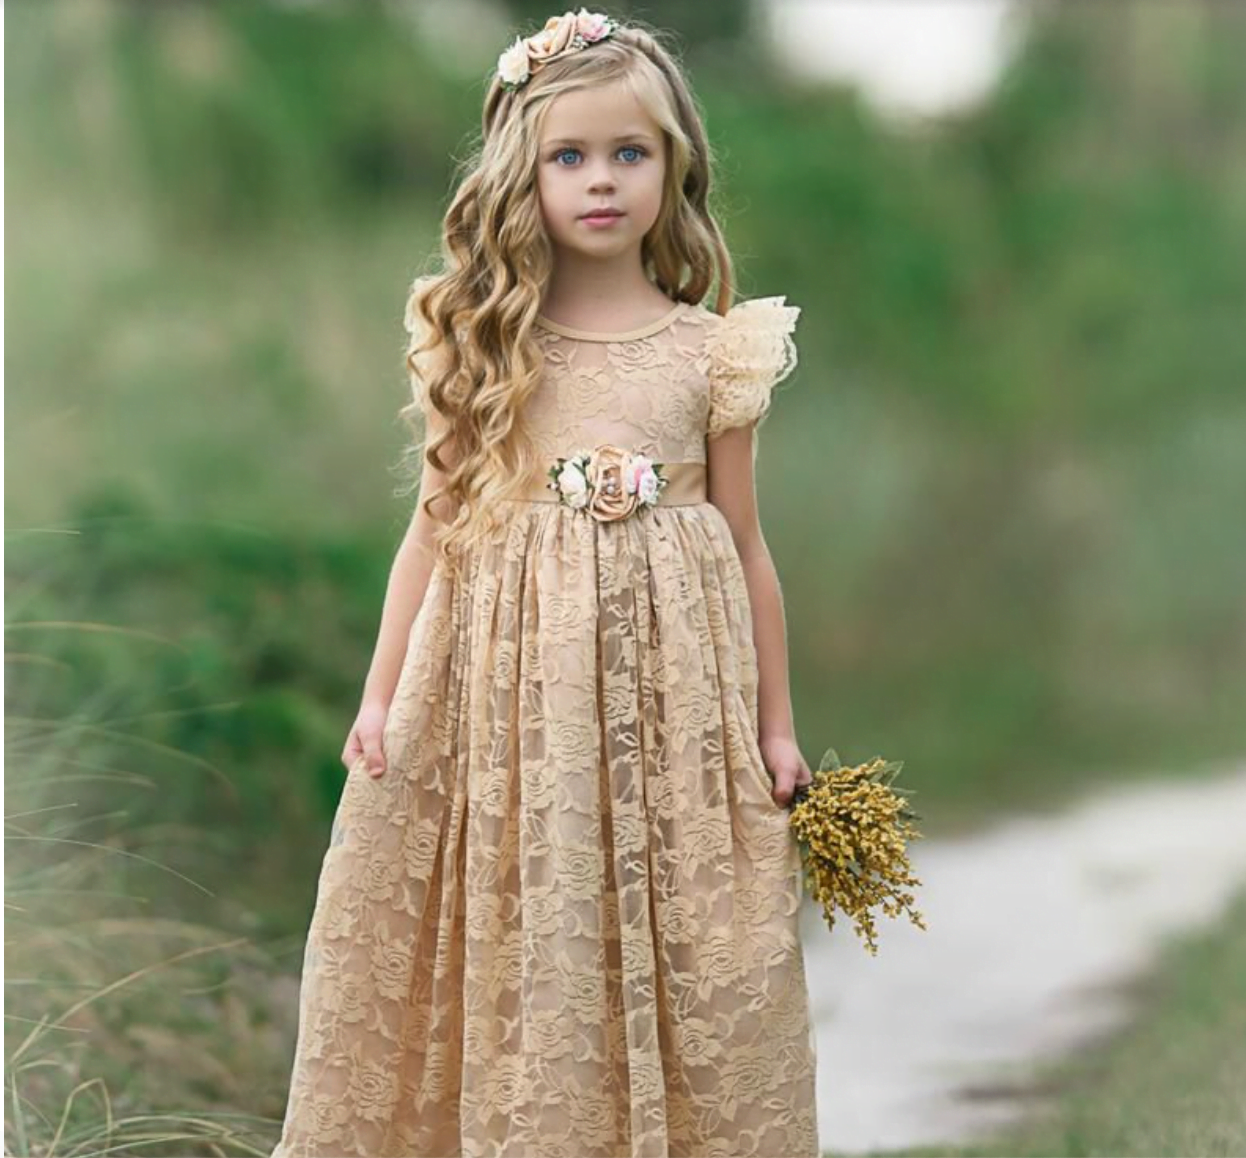 Cum alegi o rochie de fetita pentru o aniversare?